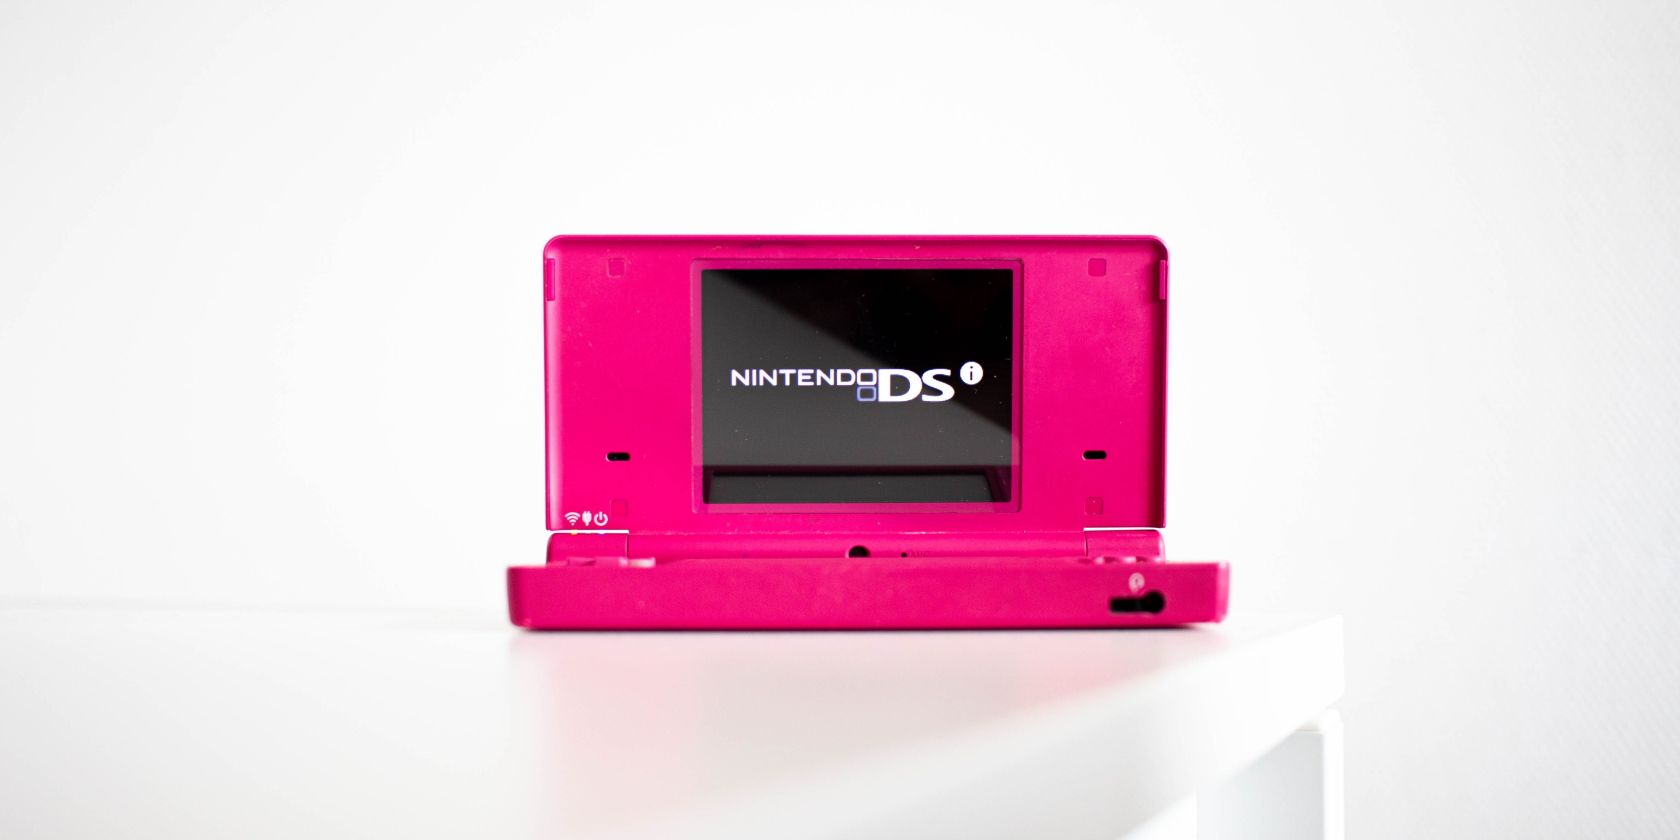 Ninendo DSi Hot Pink